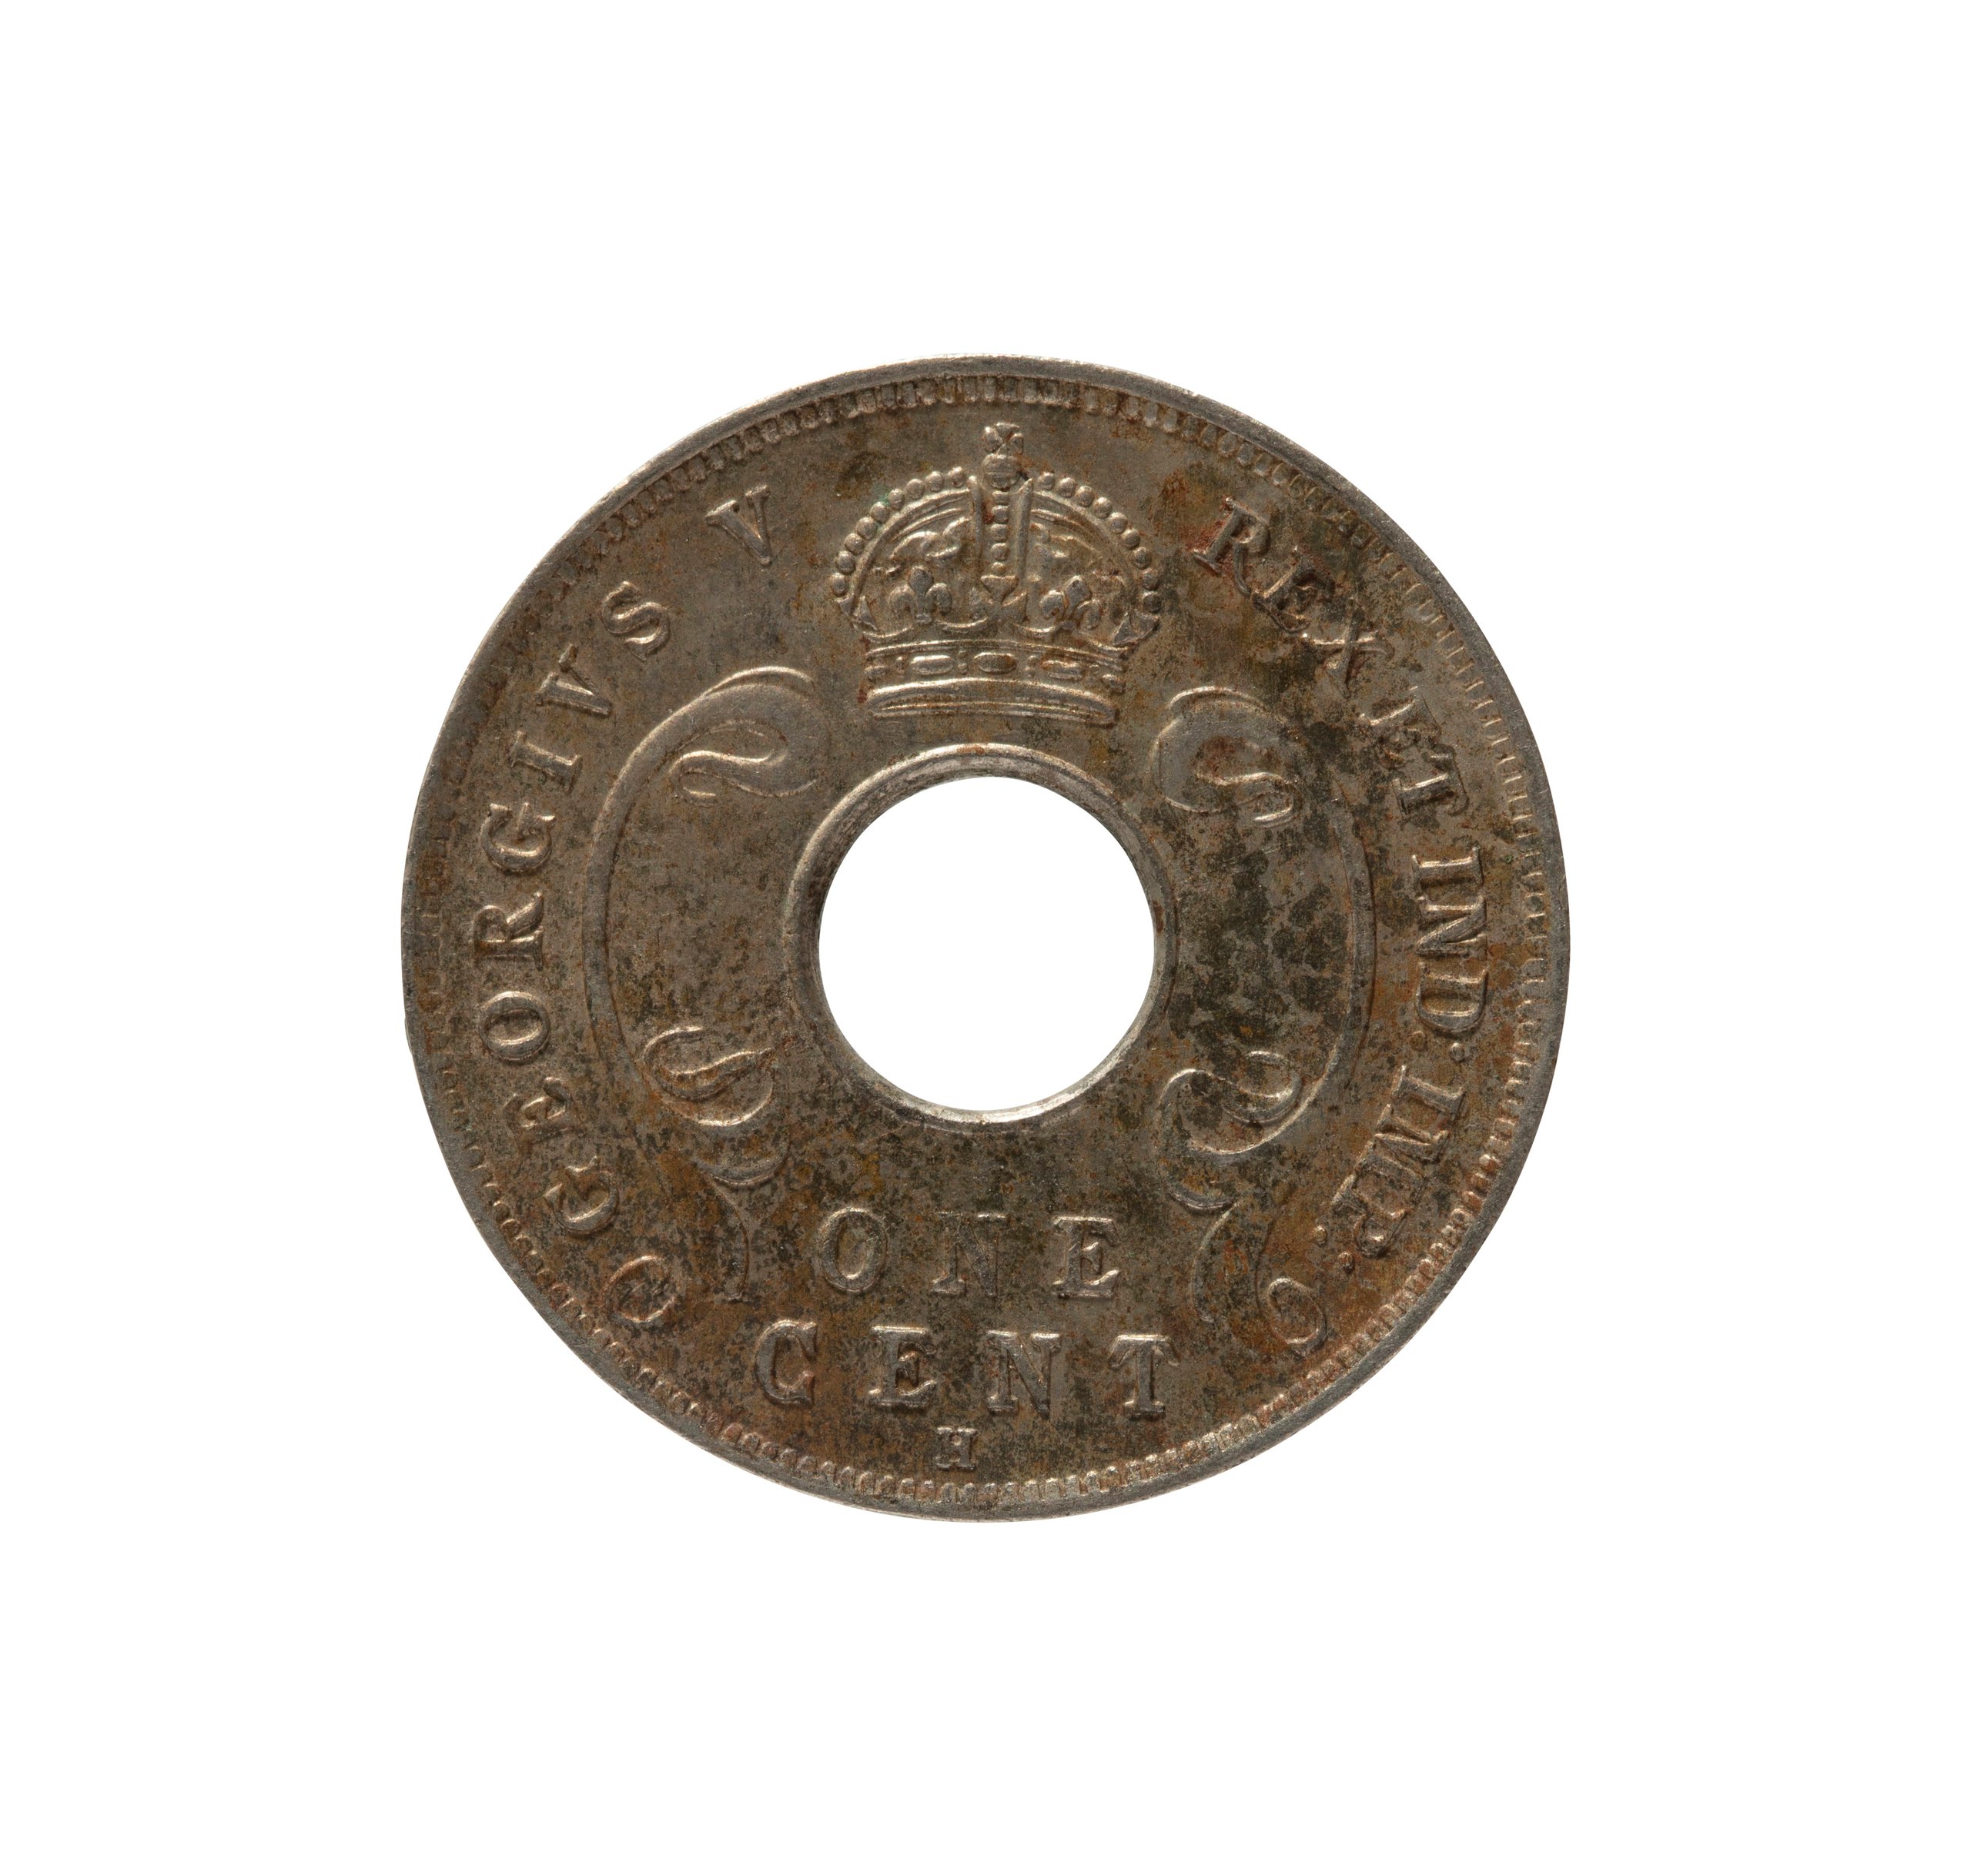 Ugandan one cent coin